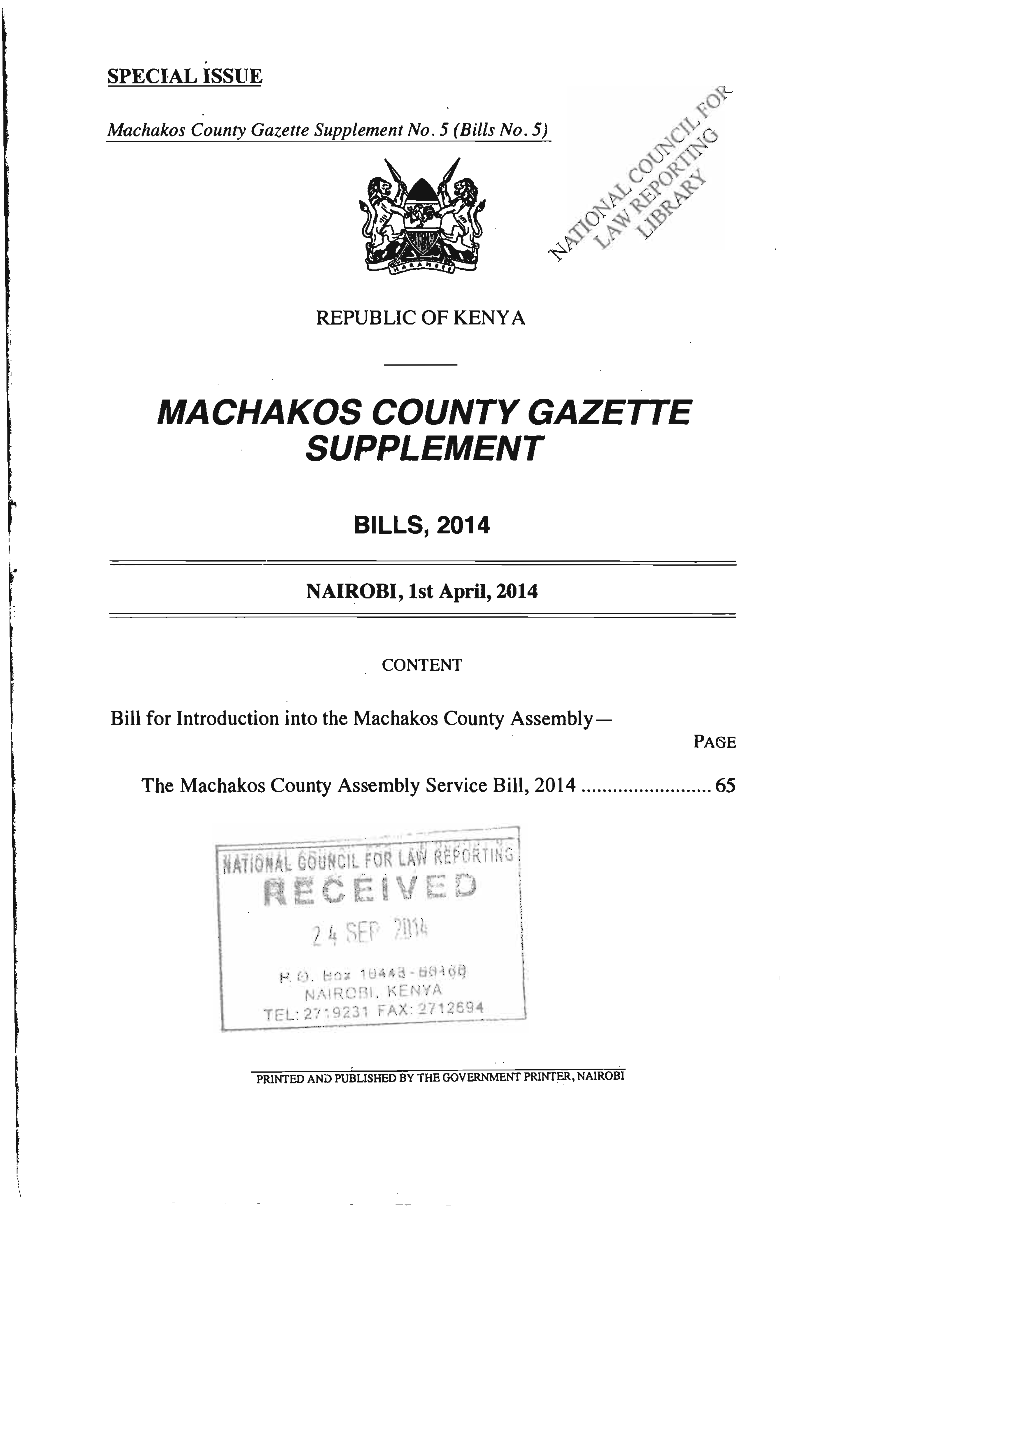 Machakos County Assembly Service Bill, 2014